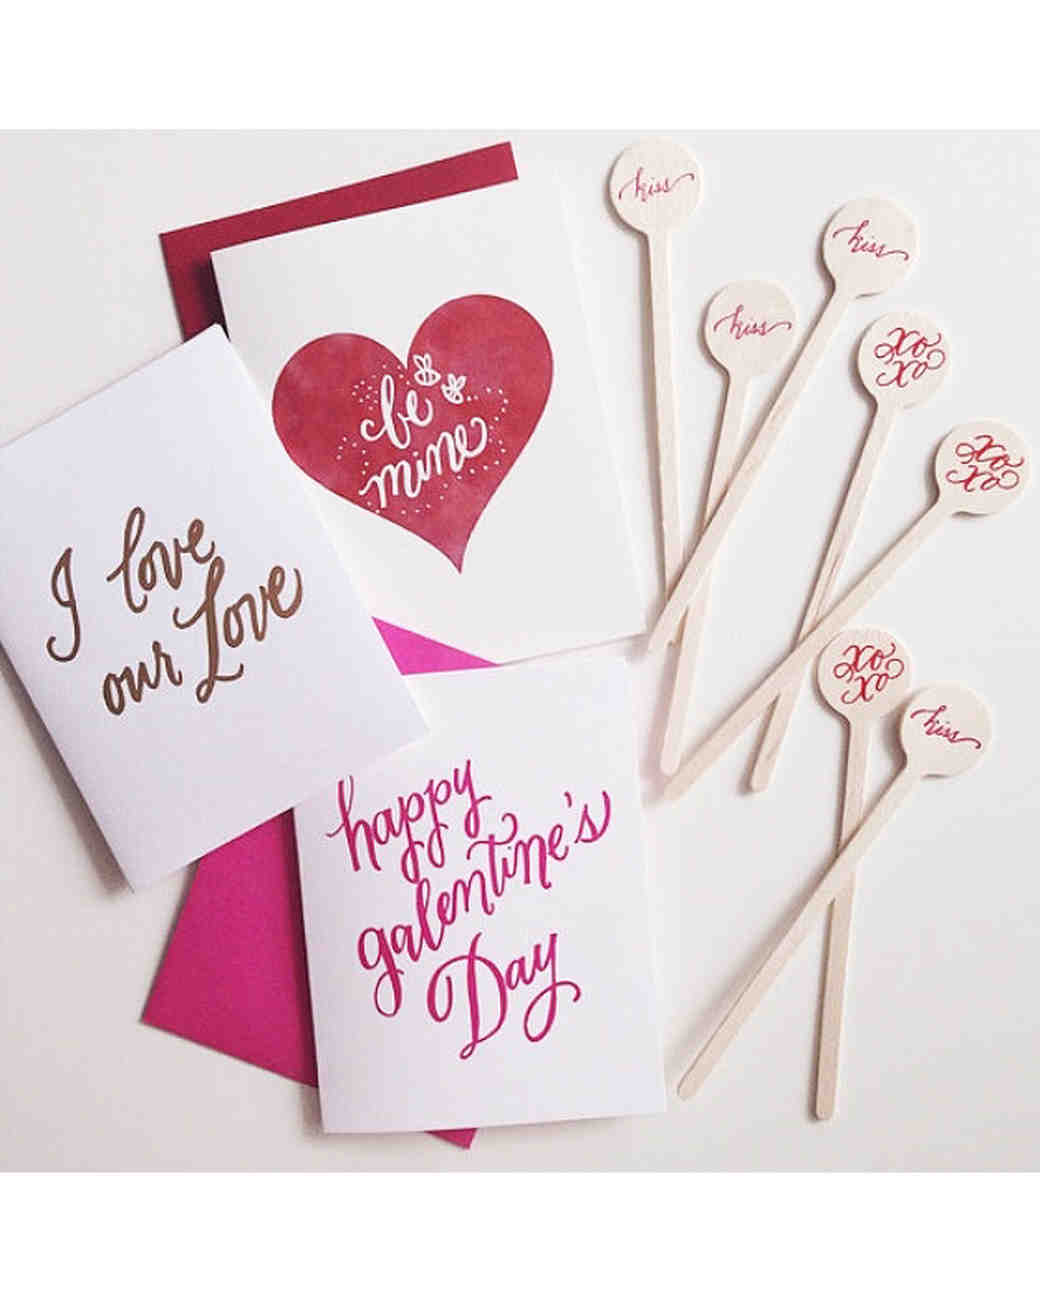 7 Décor Ideas for a Valentine's Day Party | Martha Stewart Weddings1040 x 1300